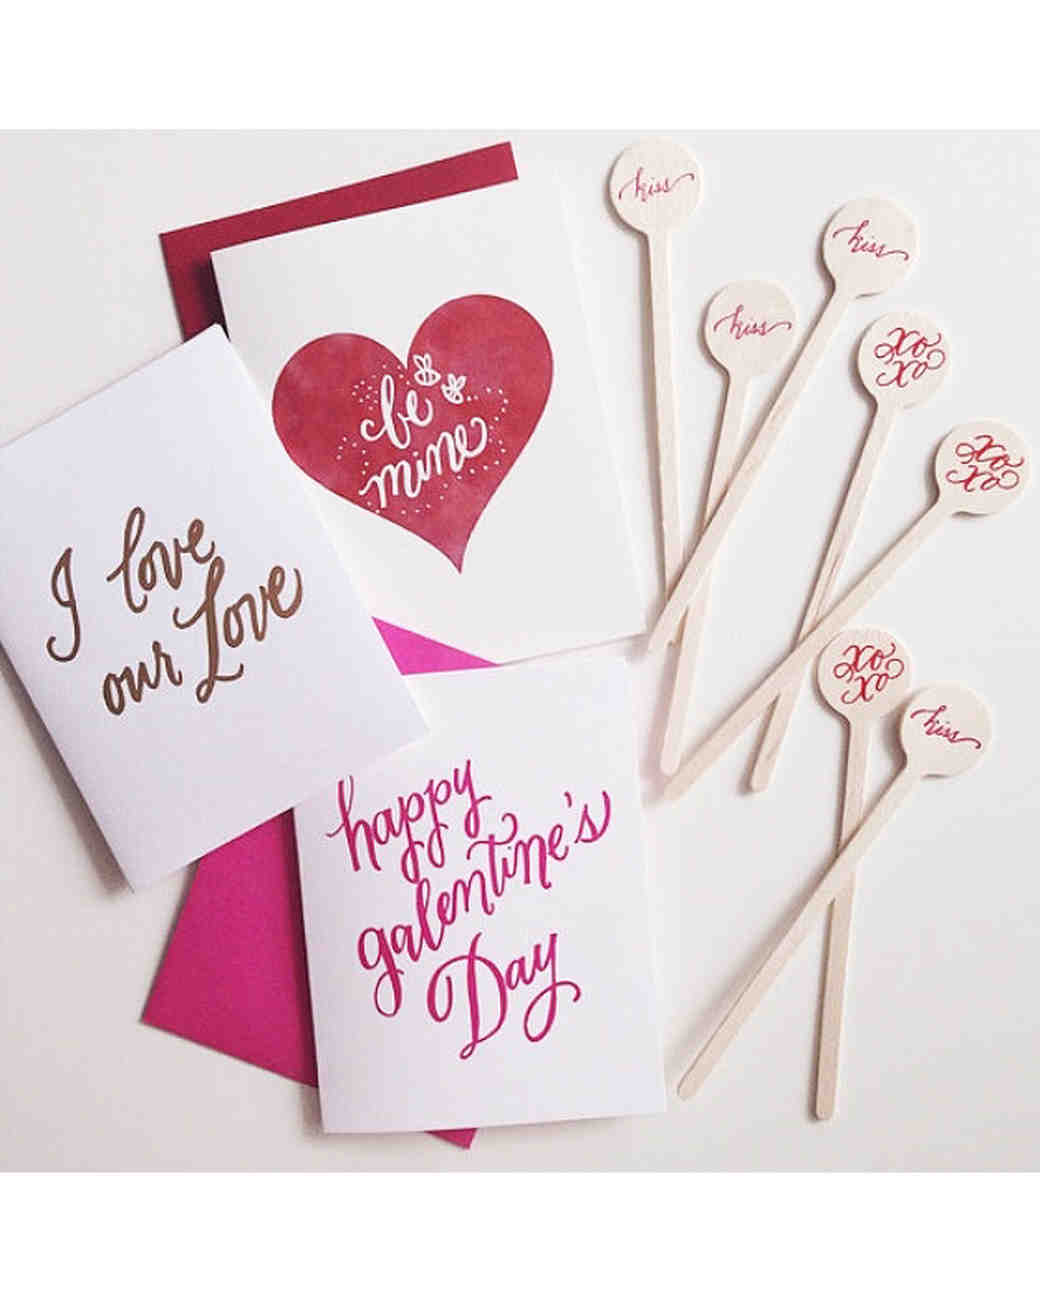 7 Décor Ideas for a Valentine's Day Party | Martha Stewart Weddings1040 x 1300